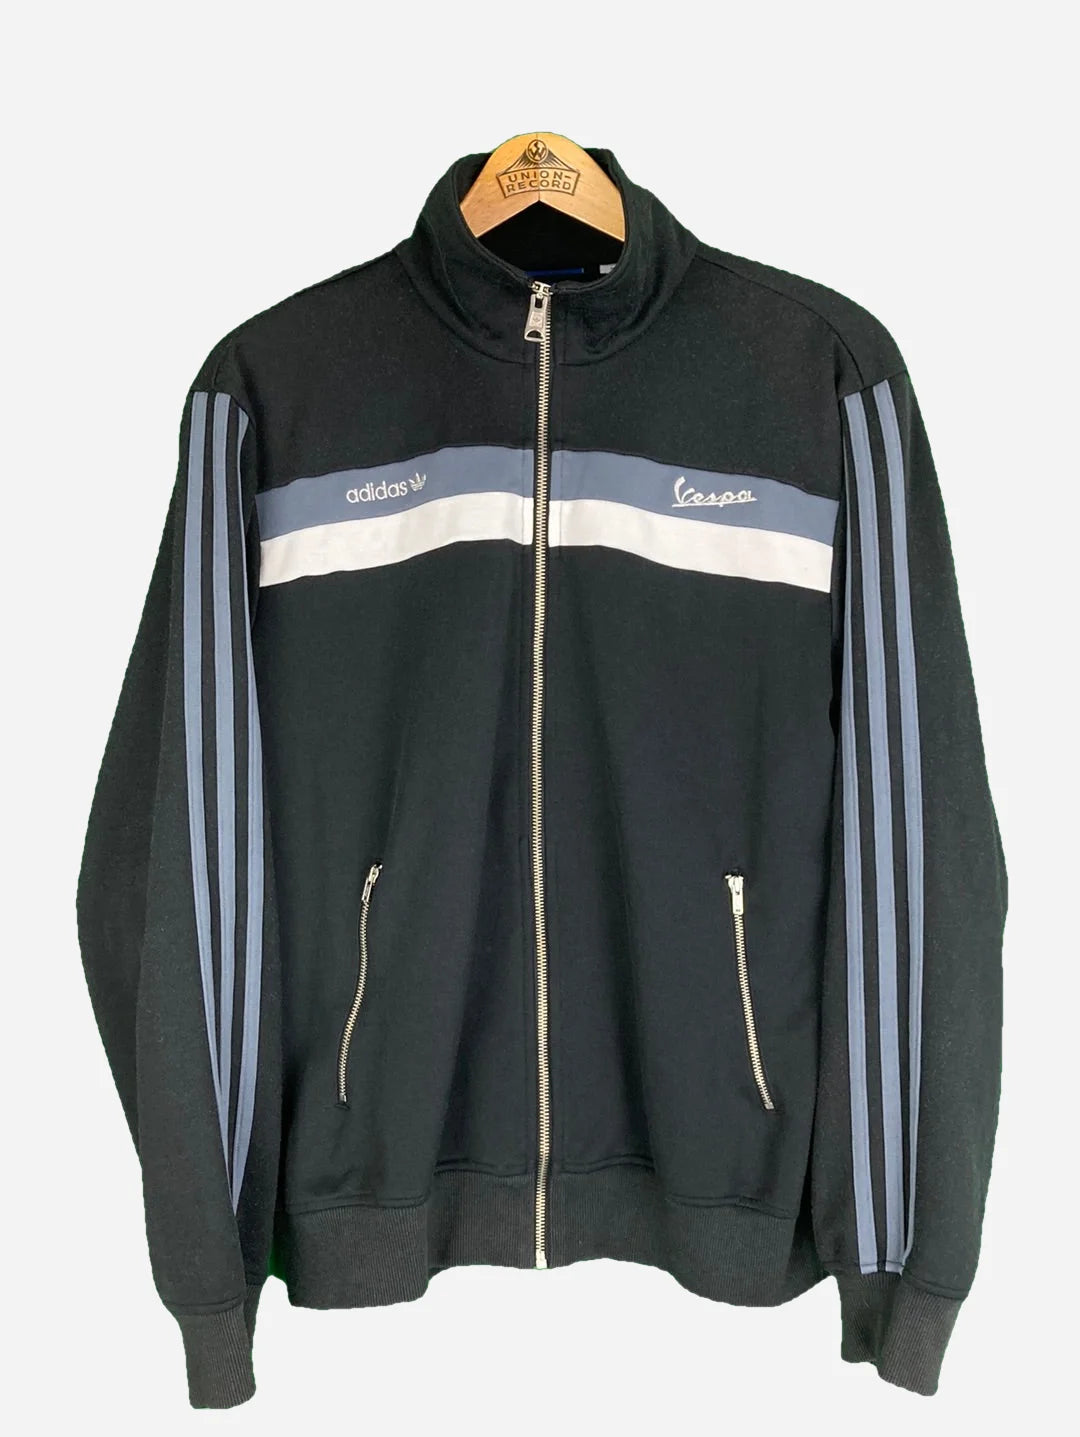 Adidas "Vespa" training jacket (M)